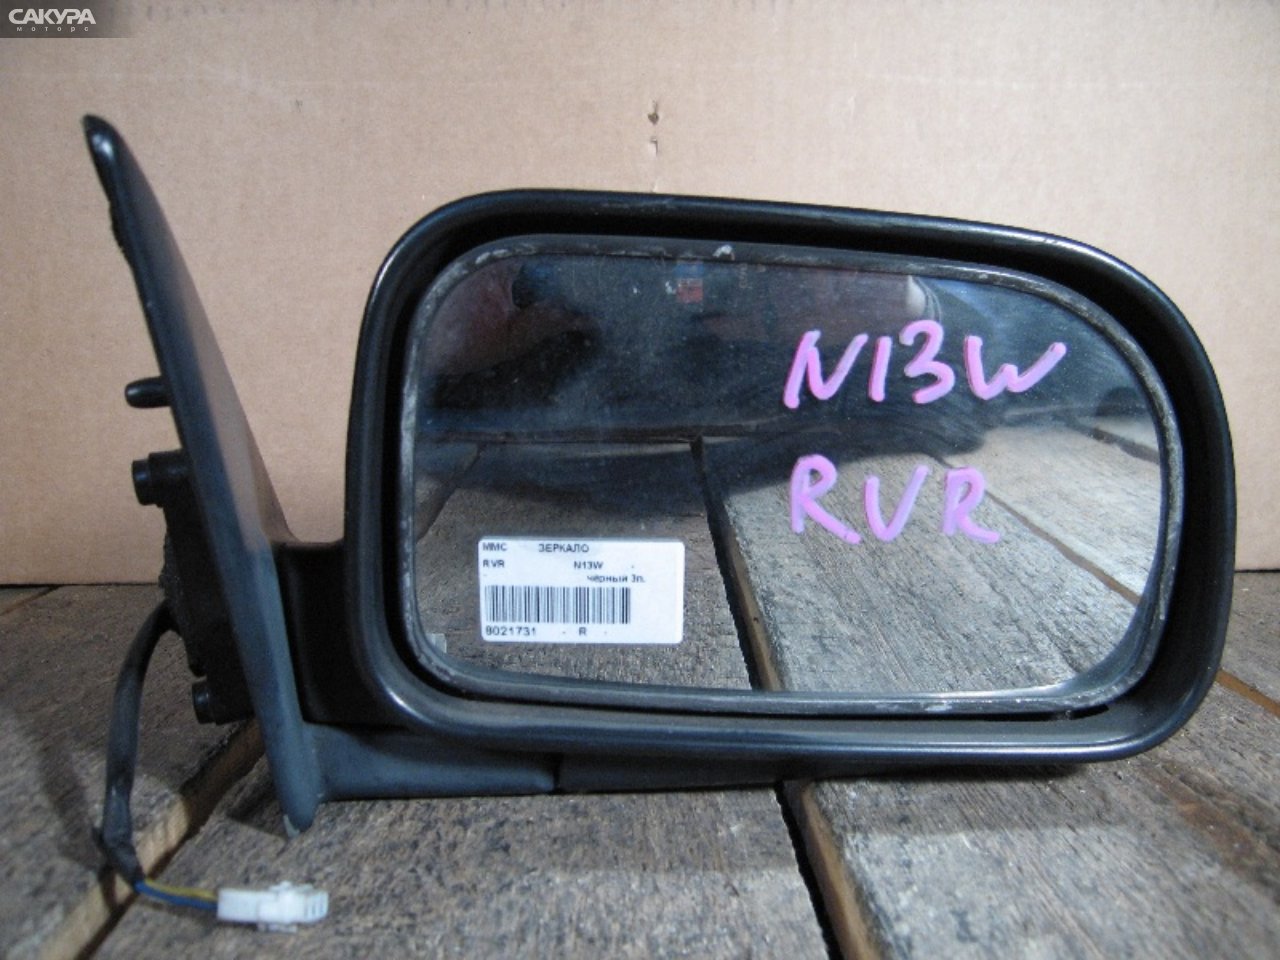 Зеркало боковое правое Mitsubishi RVR N13W: купить в Сакура Абакан.